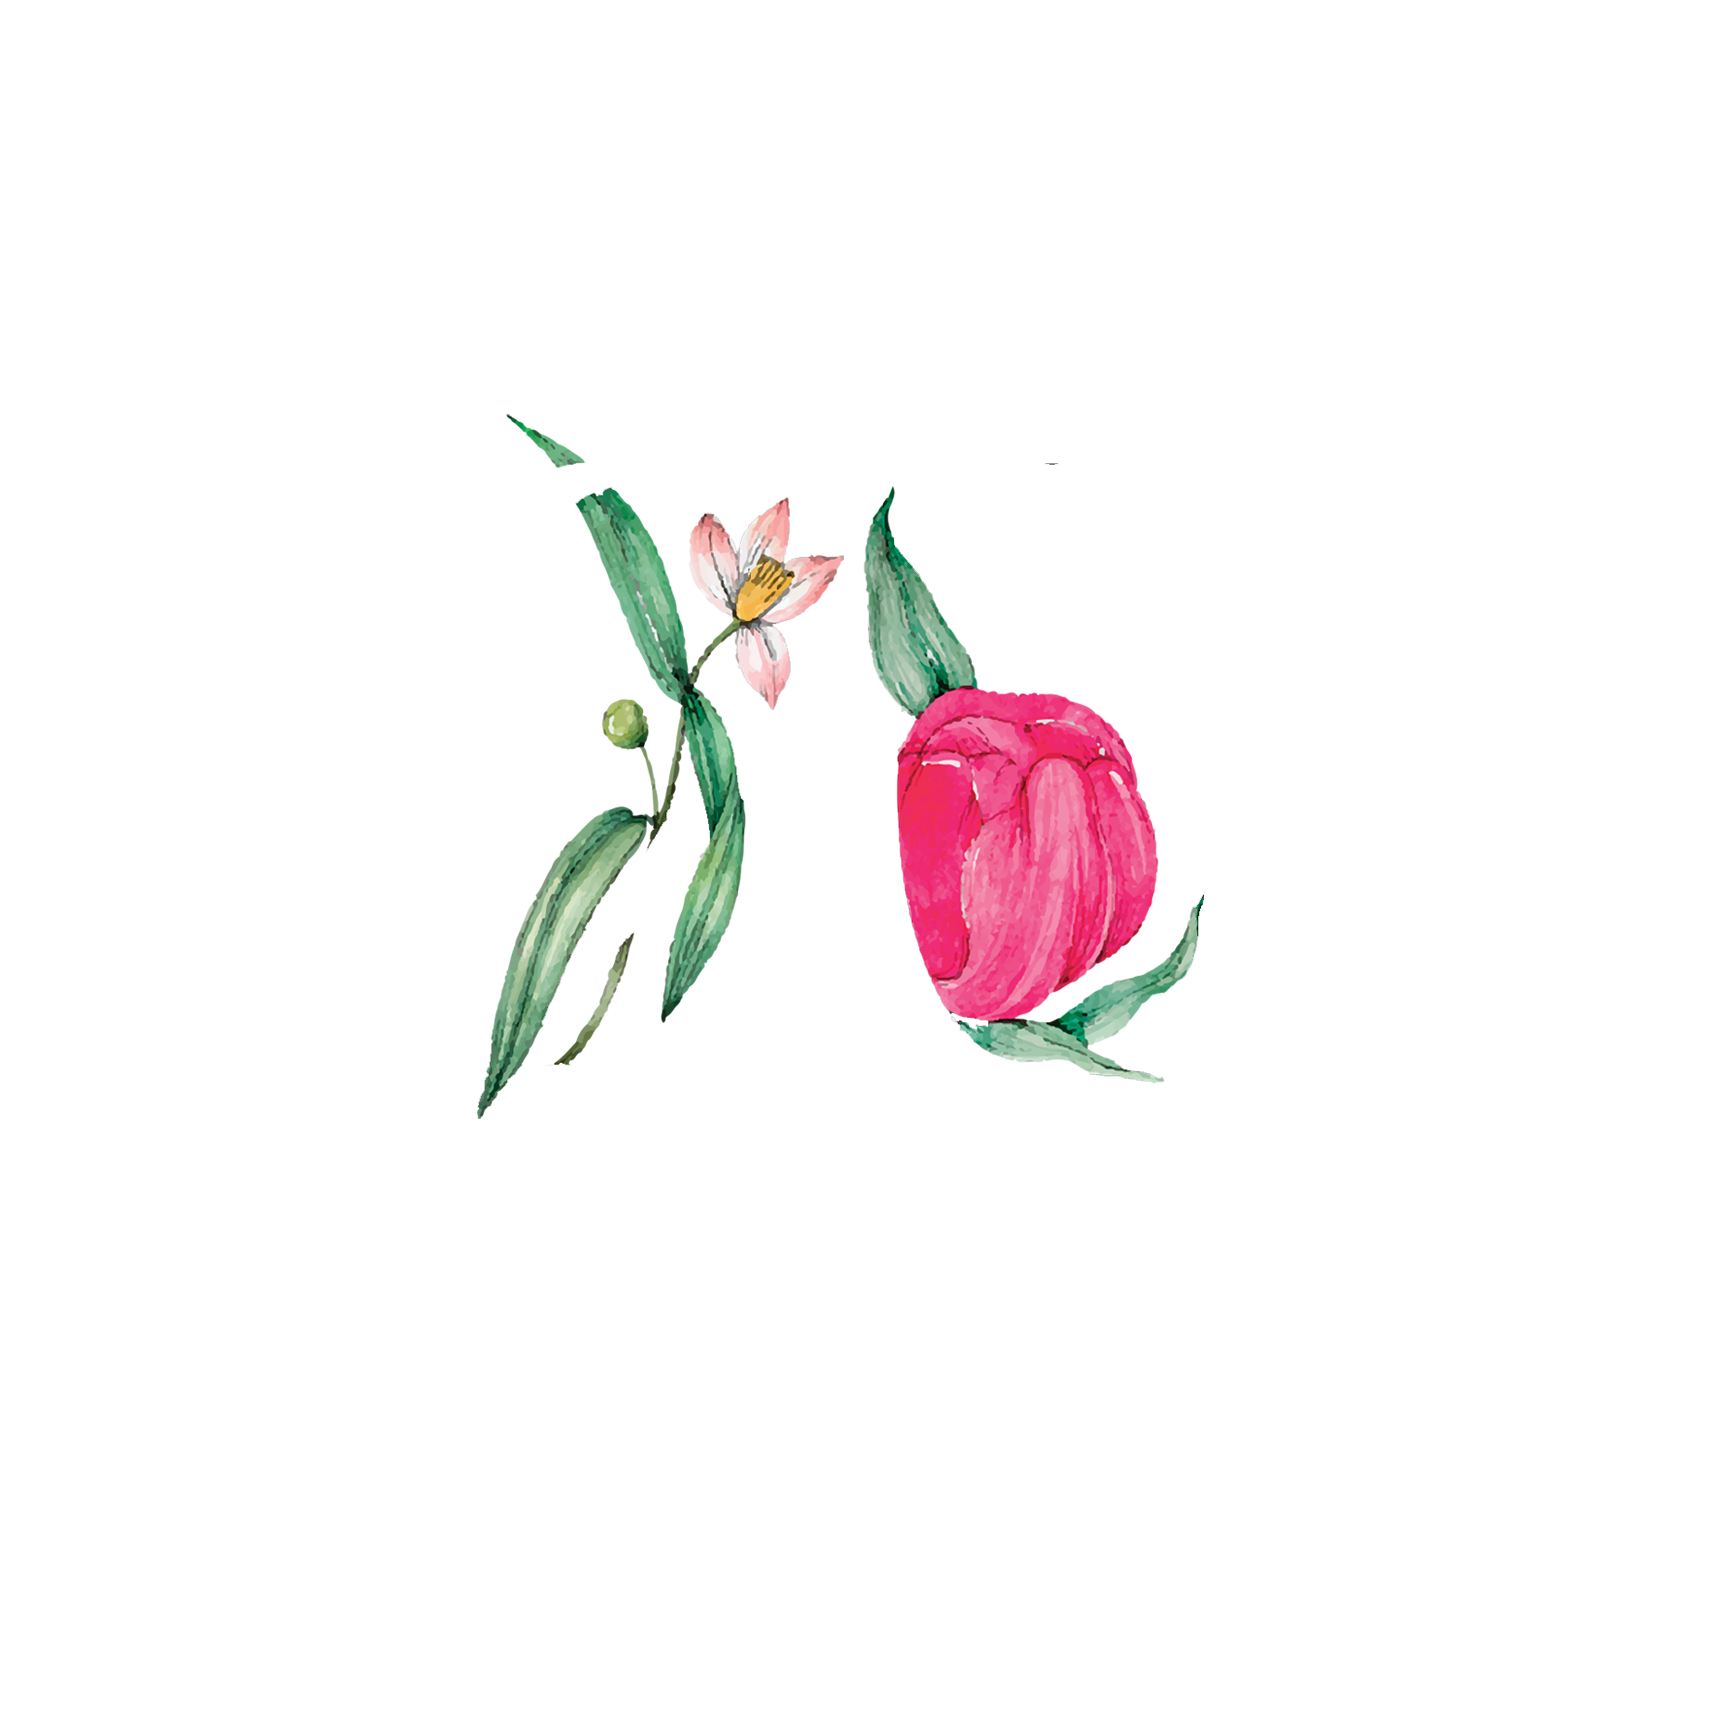 Click to read Day 20 - Senses